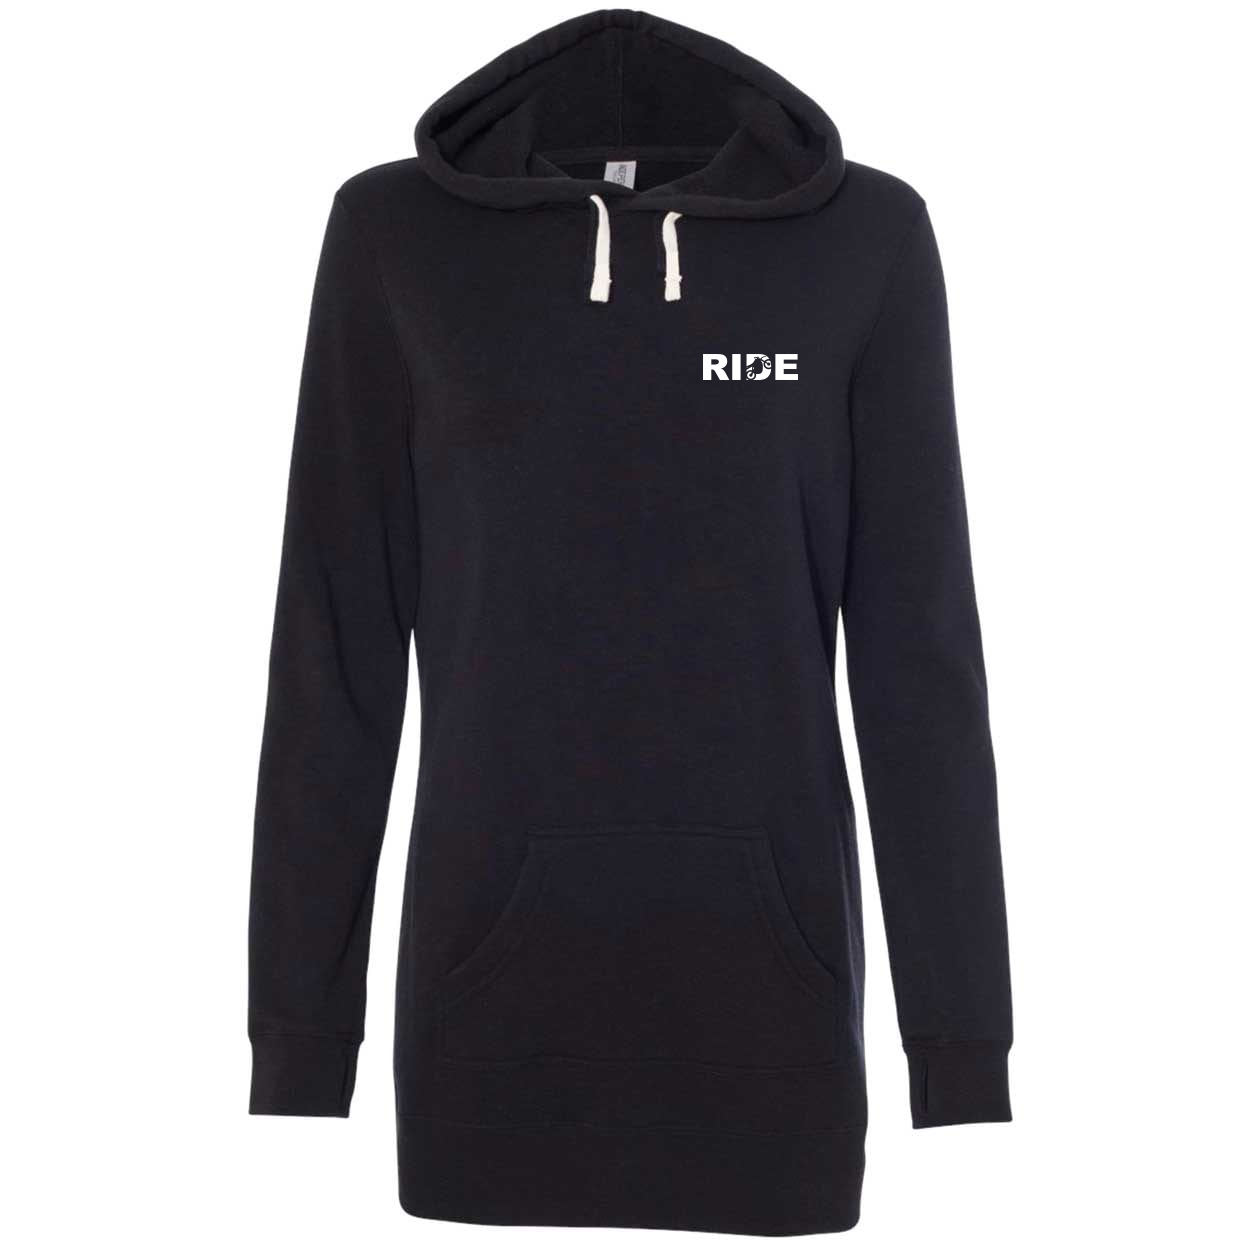 Ride Moto Logo Night Out Womens Pullover Hooded Sweatshirt Dress Black